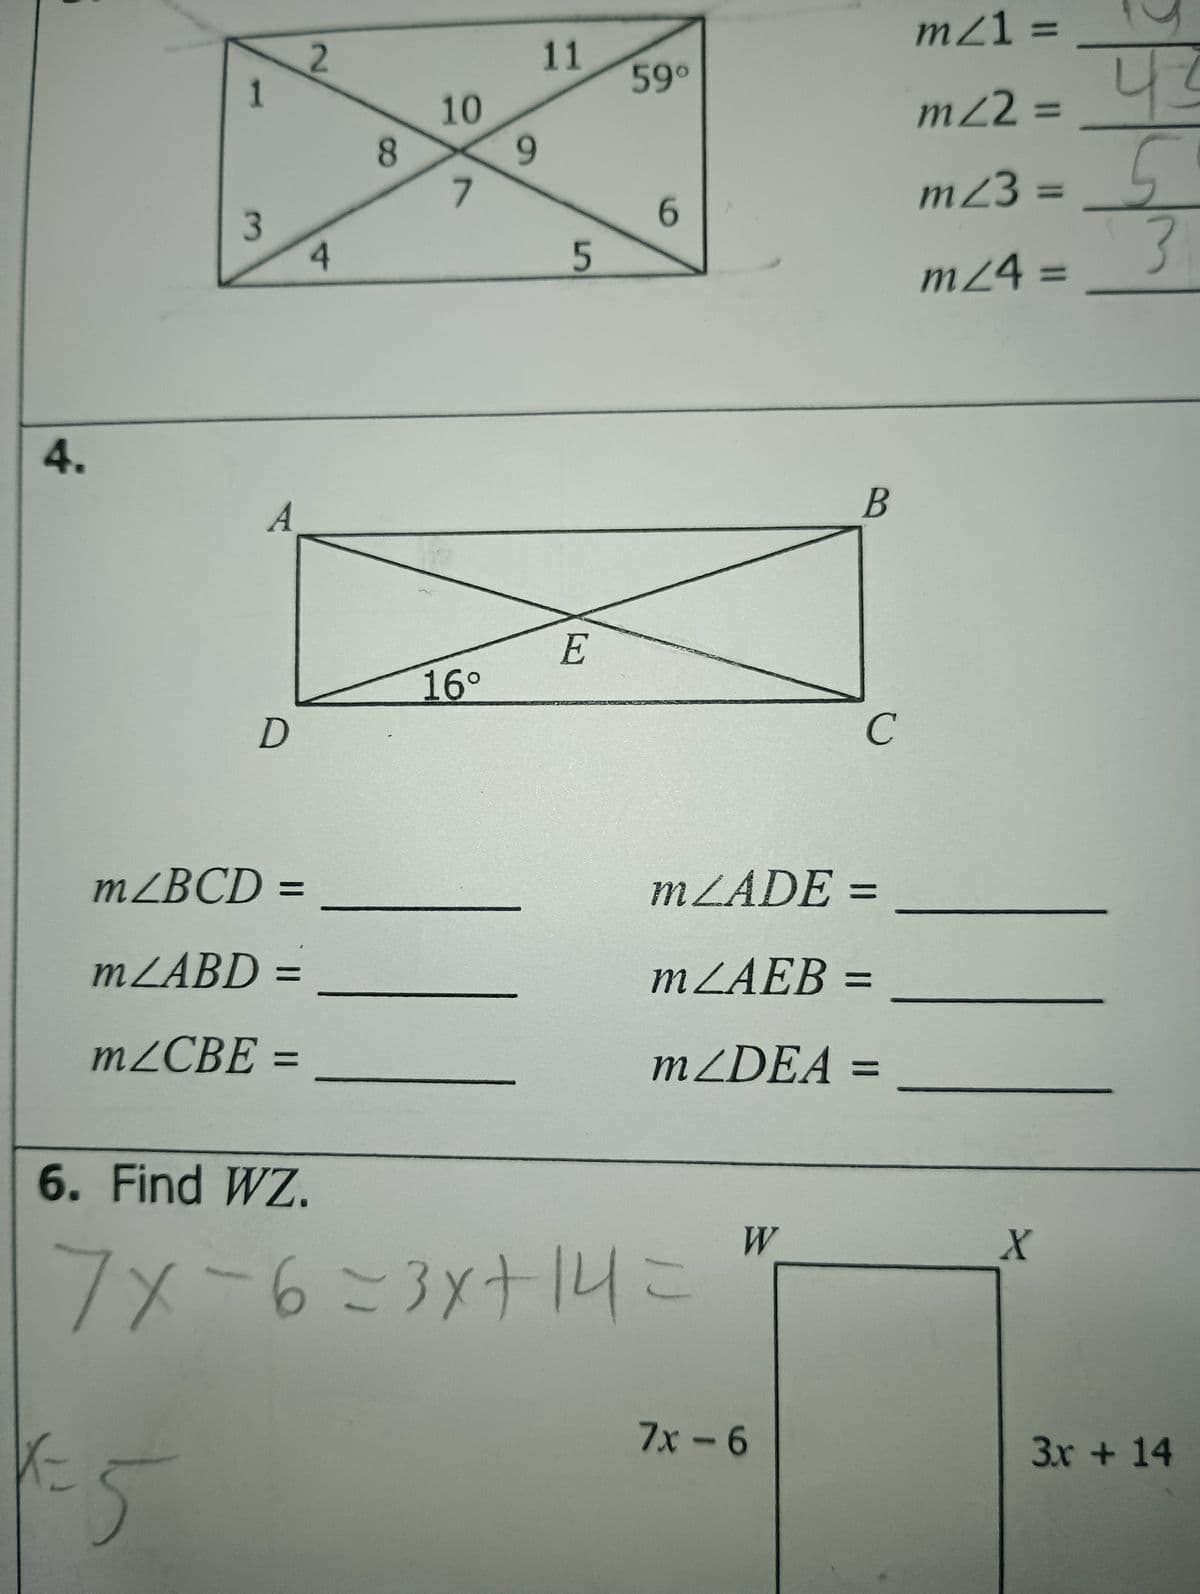 4.
A
3
2
1
4
8
11
59°
10
9
7
6
5
E
16°
D
mZBCD =
mZADE =
mZABD =
mZAEB =
=
mZCBE =
mZDEA =
6. Find WZ.
7x-6=3x+14=
た
F5
C
B
W
X
mz1 =
mz2 = =
43
m23 = 5
3
m24 =
7x-6
3.x + 14